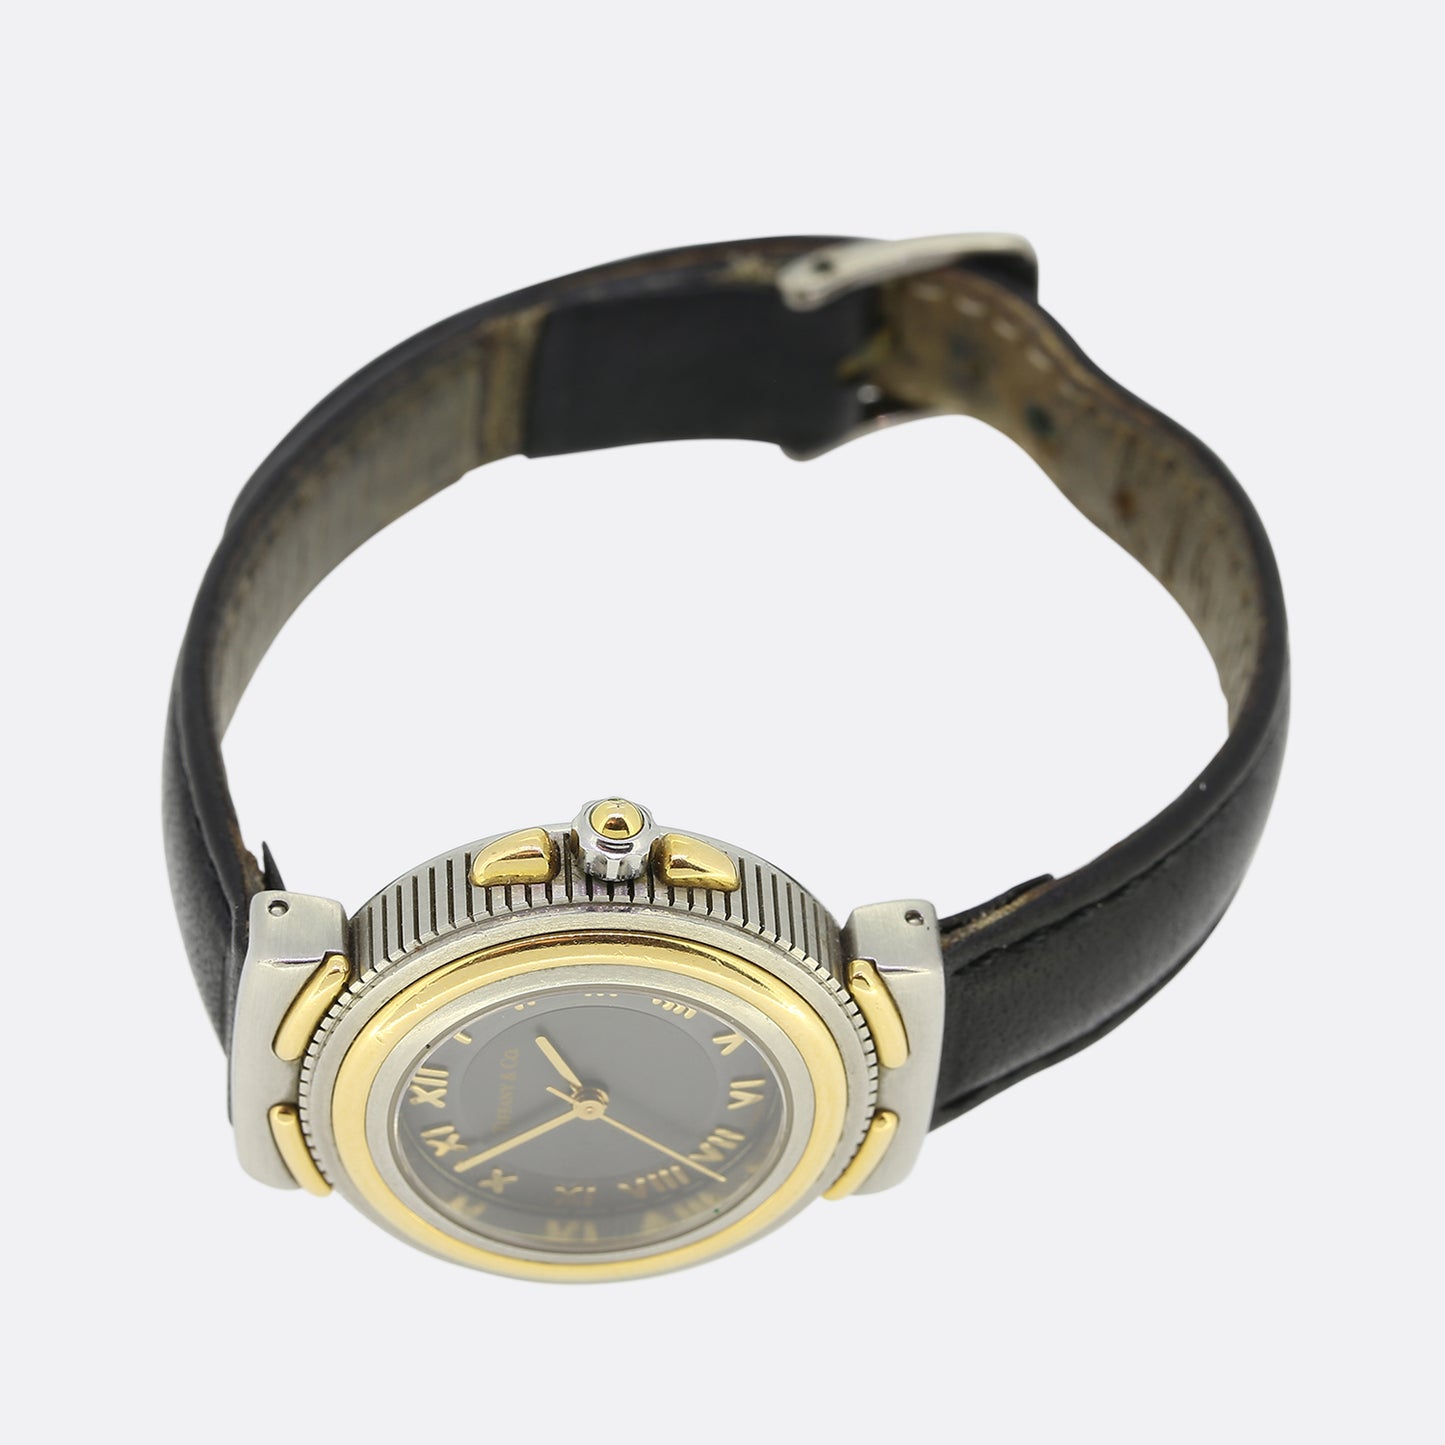 Tiffany & Co. Atlas Ladies Wristwatch